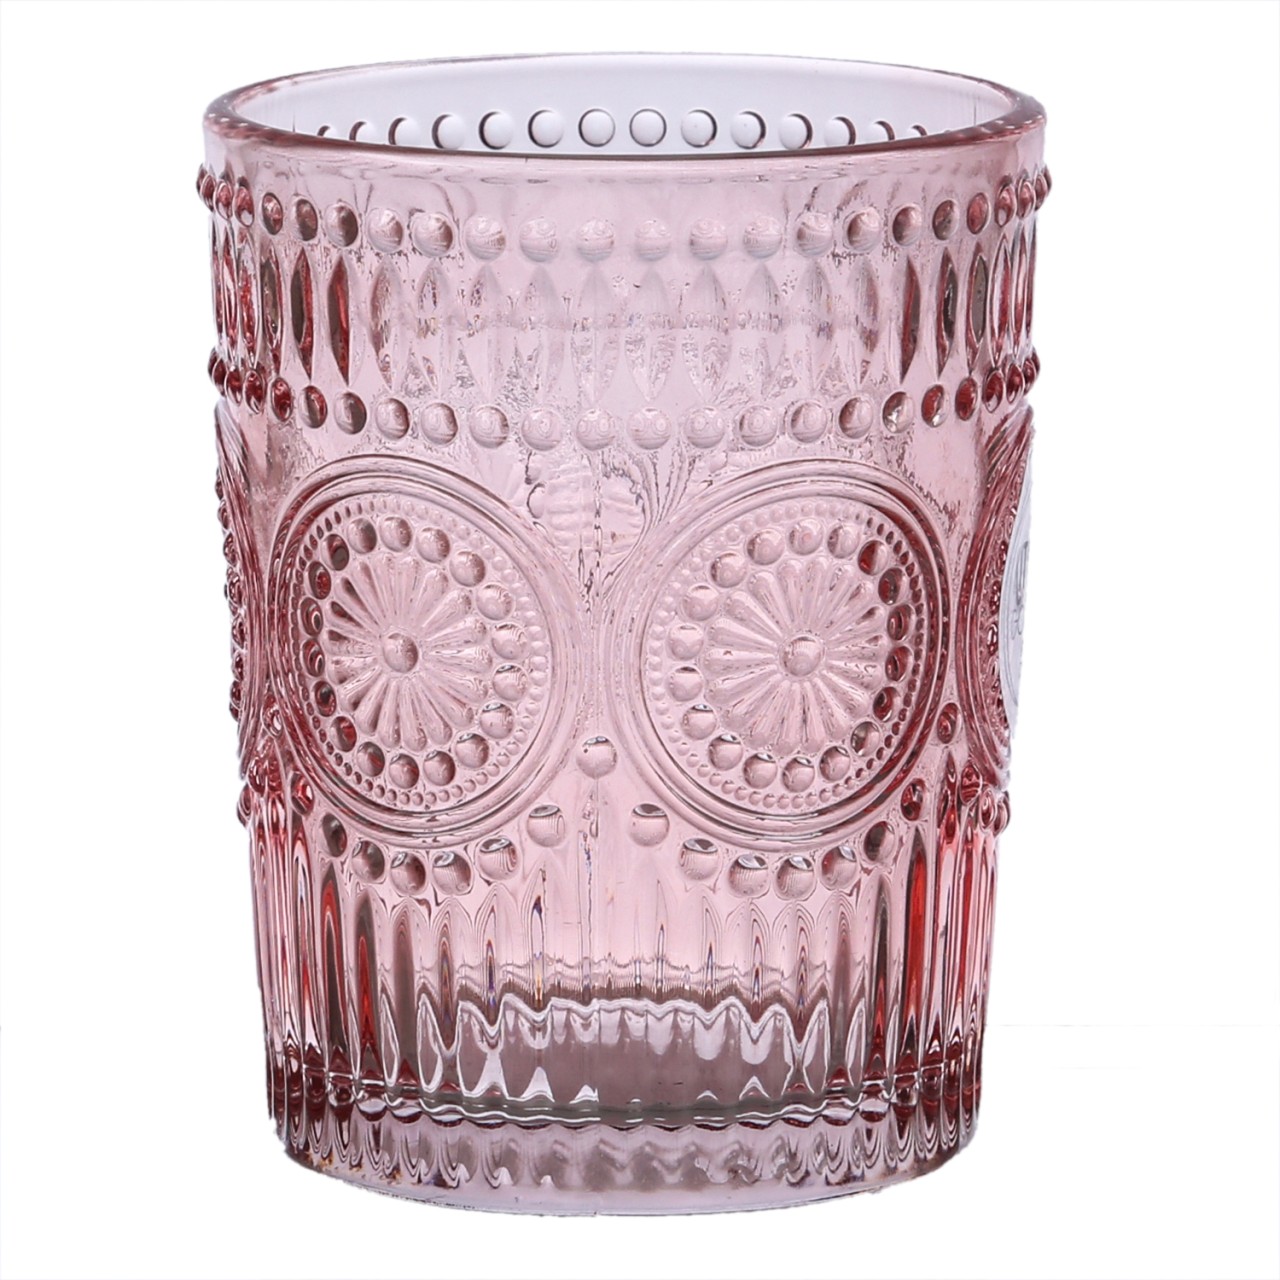 Trinkglas Vintage mit Blumenmuster – Glas – 280ml – H: 10cm – Bohos…